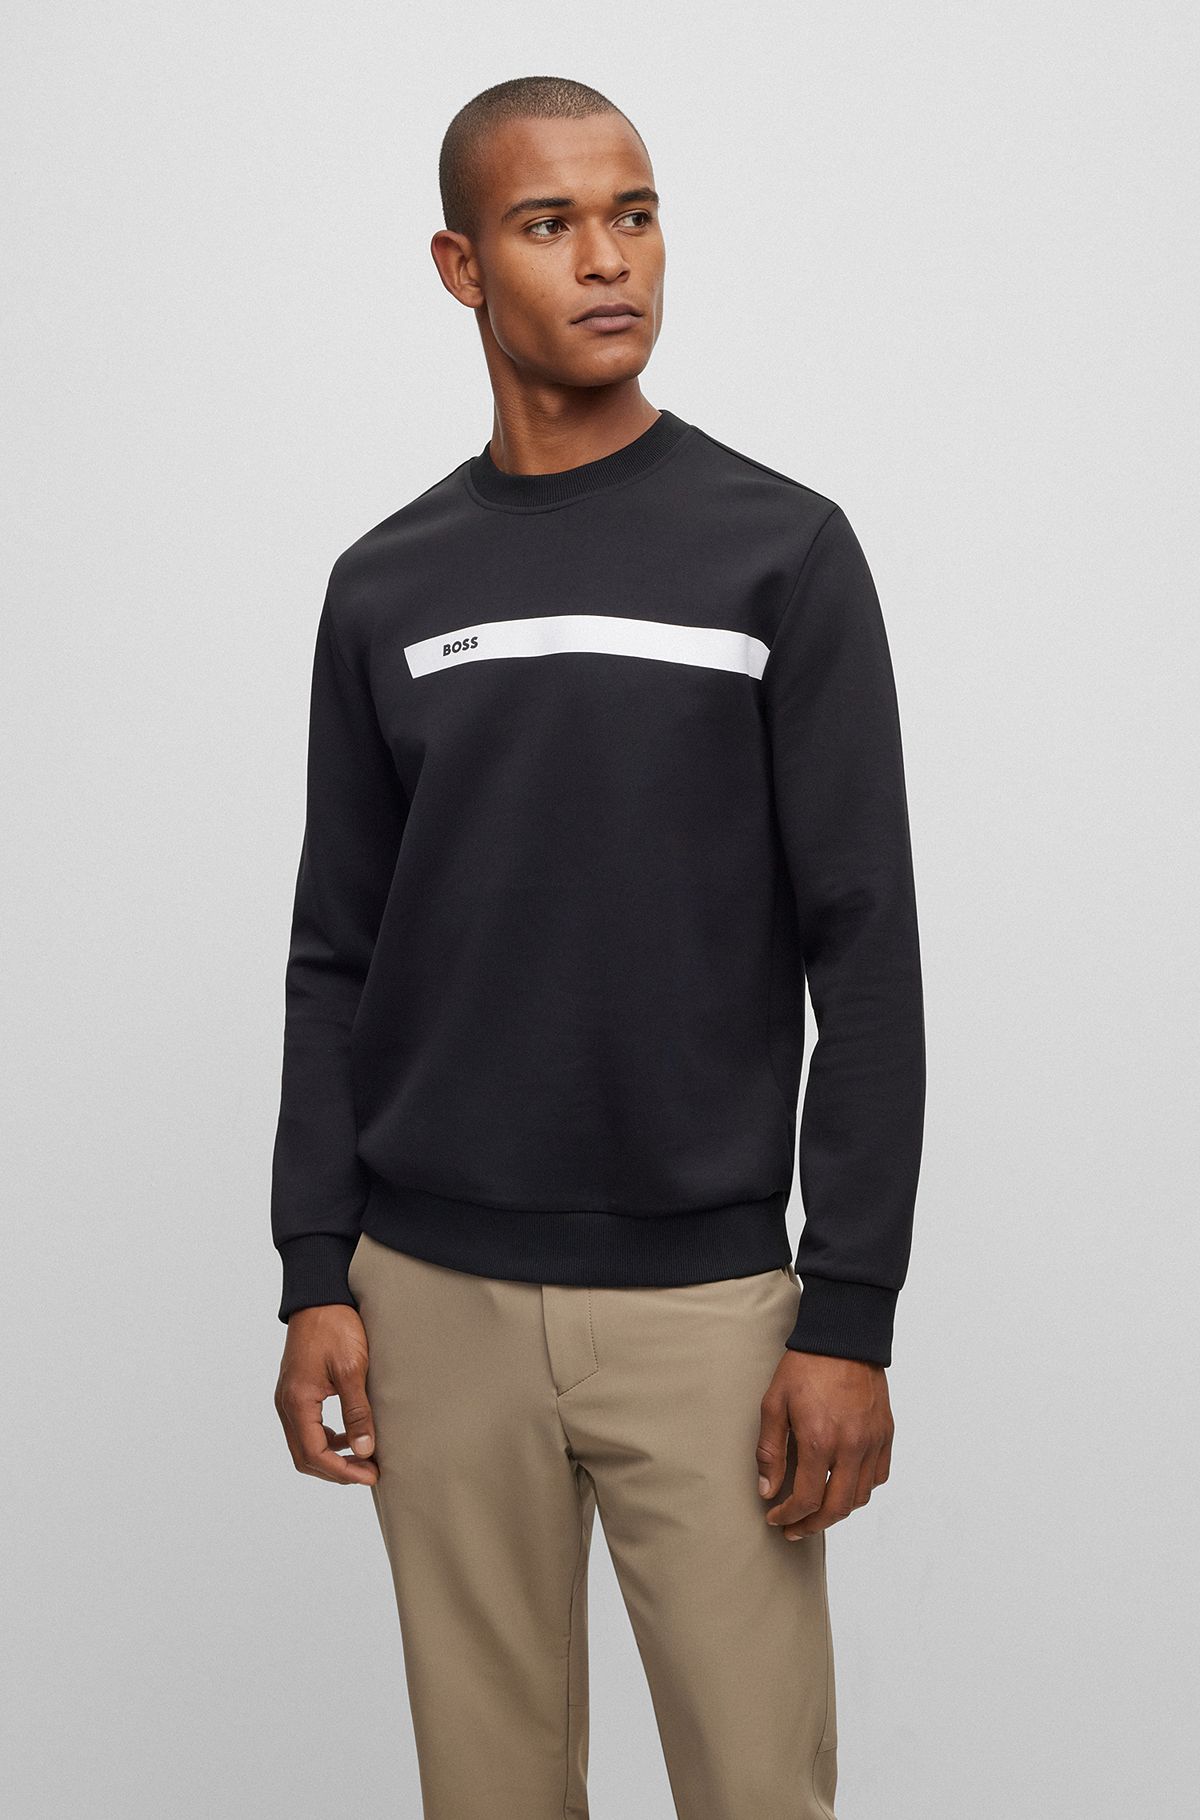 Cotton-blend sweatshirt with graphic logo stripe, Black